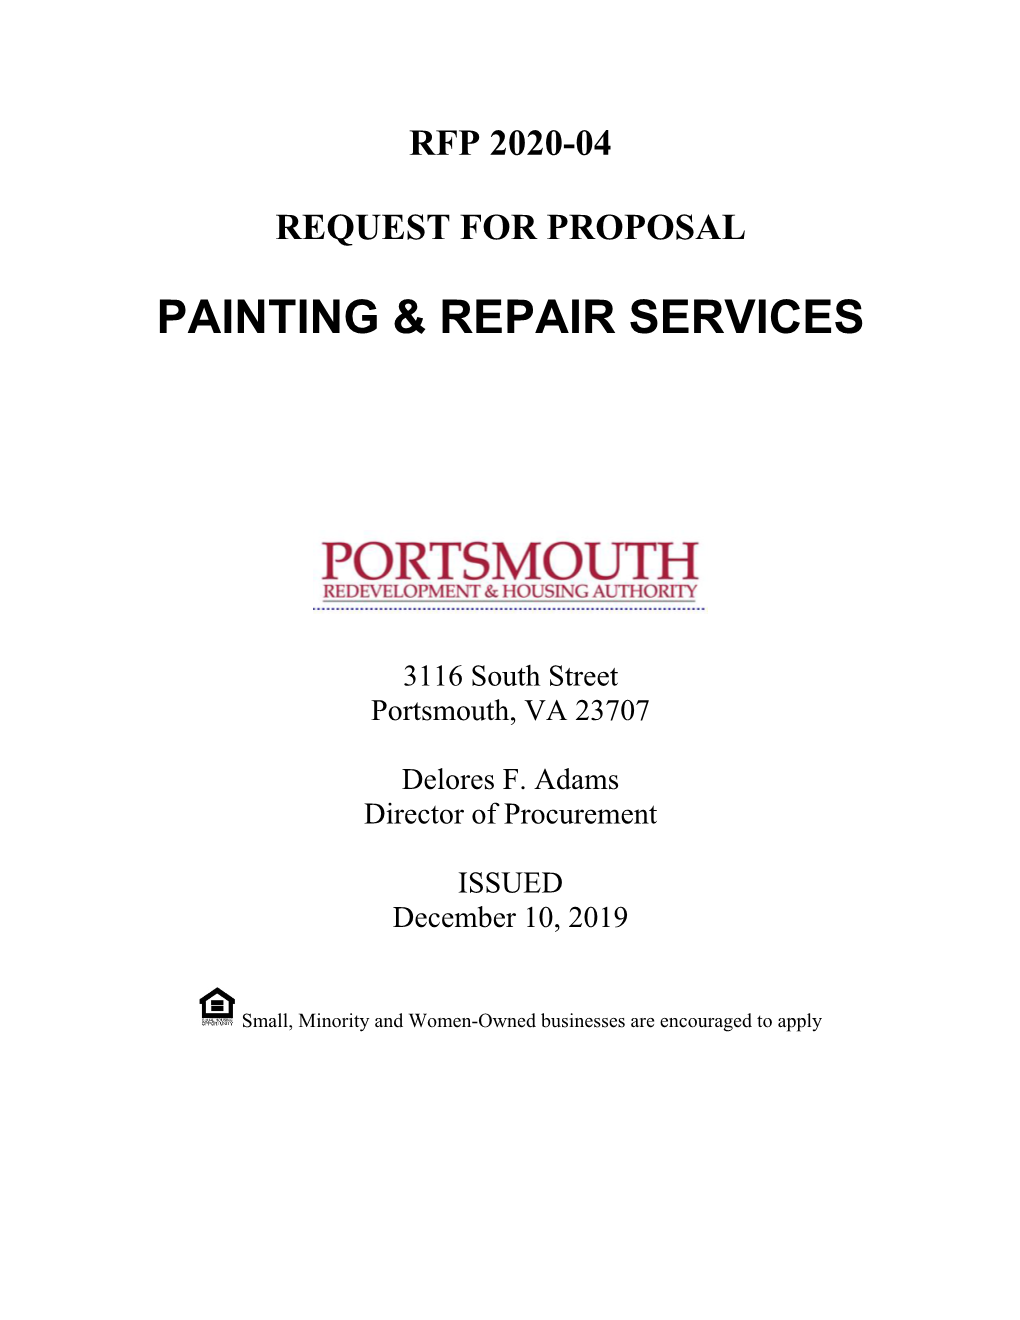 Painting & Repair Services